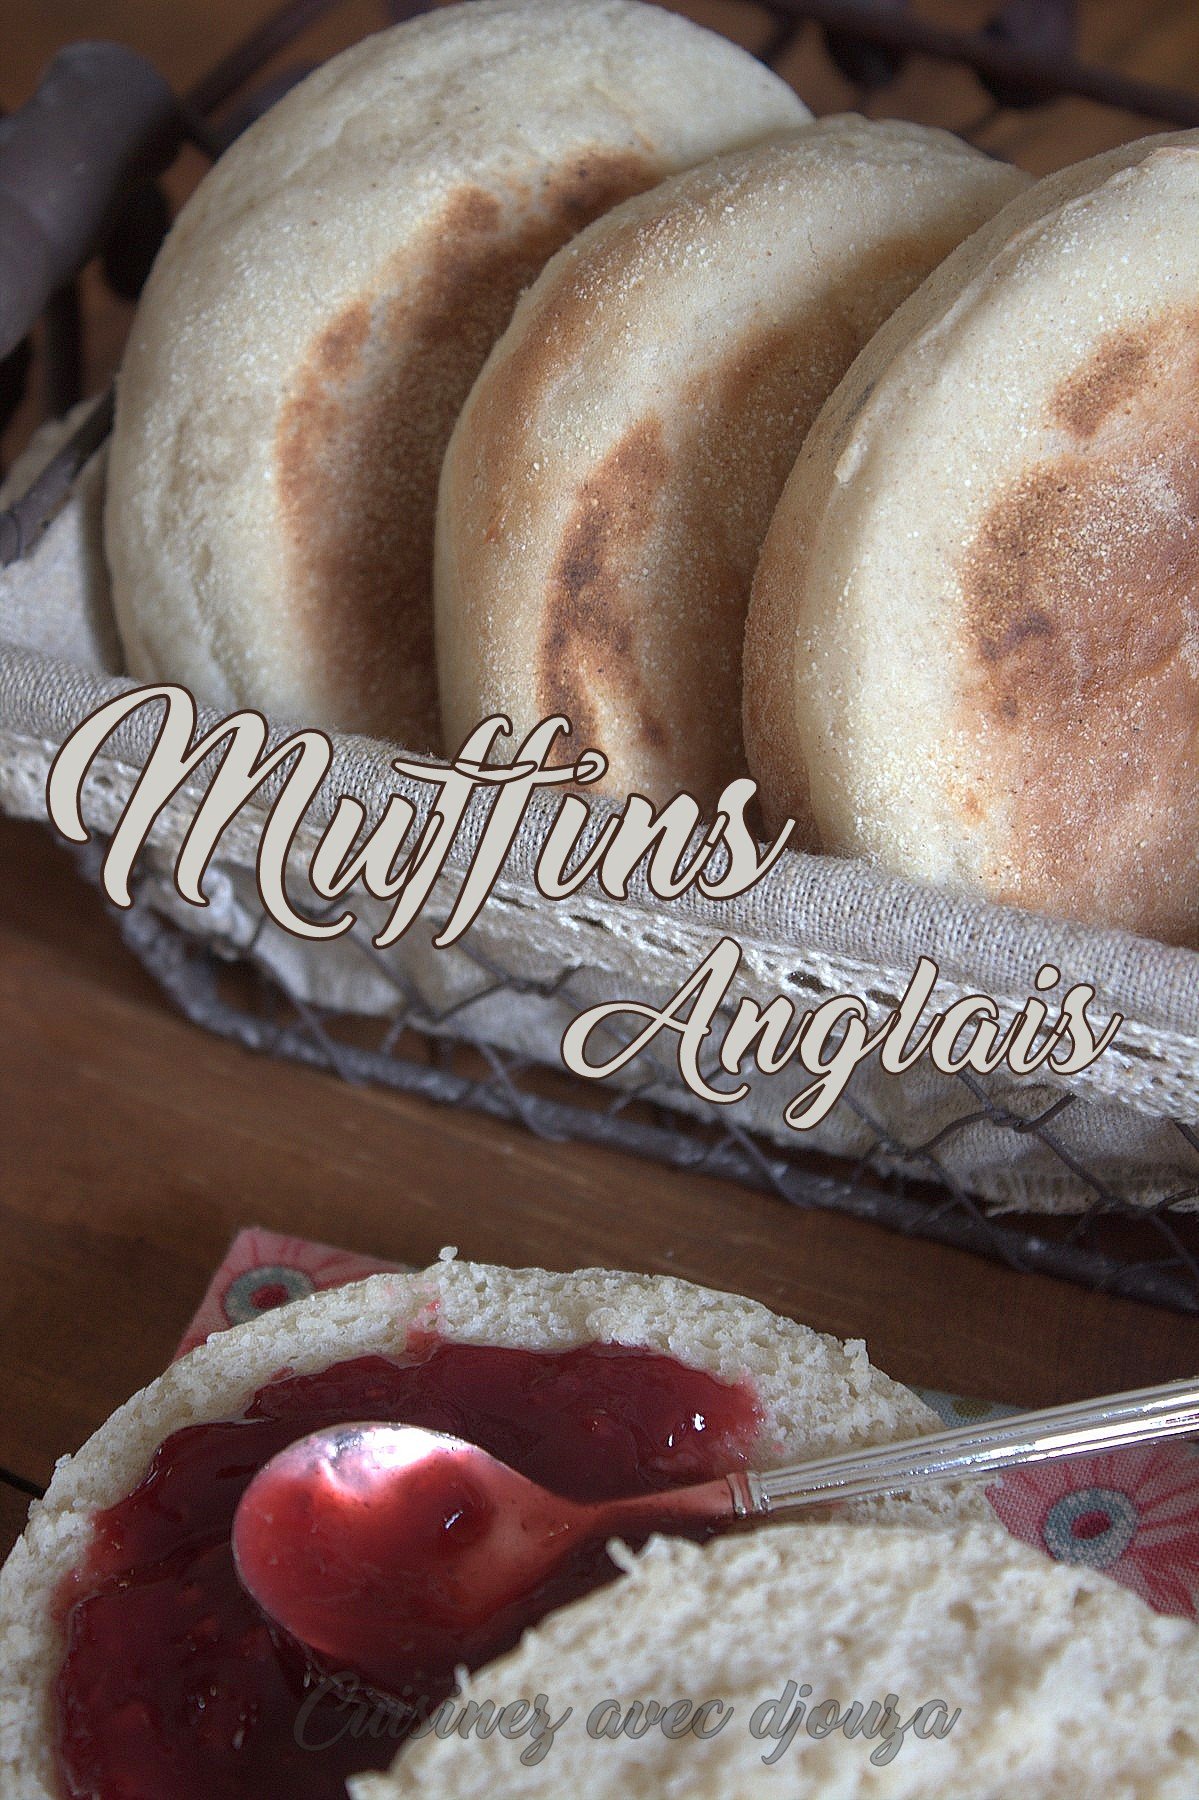 Petits pains anglais muffins